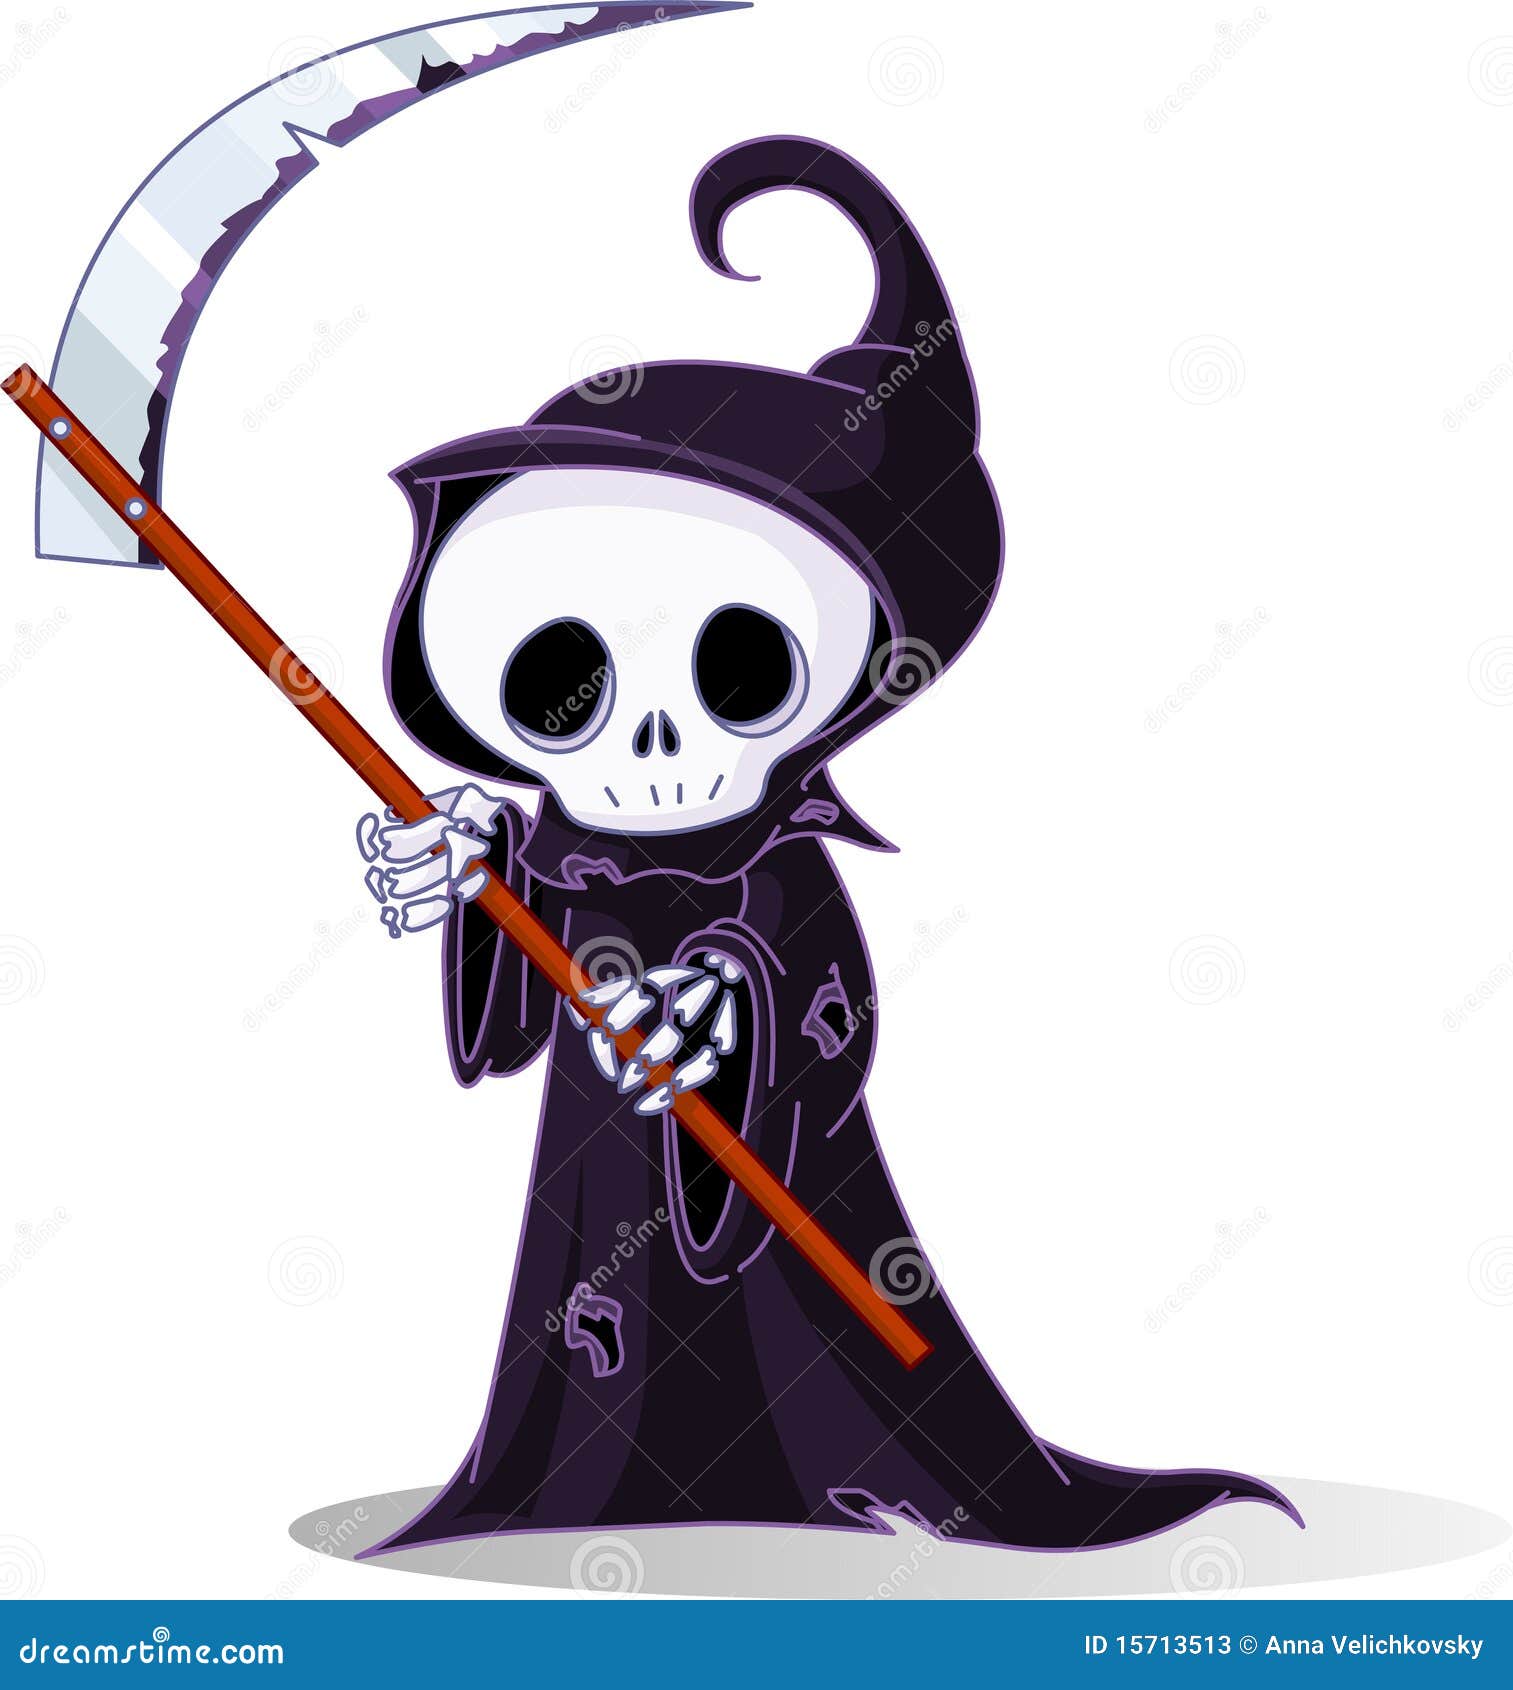 cartoon-grim-reaper-15713513.jpg